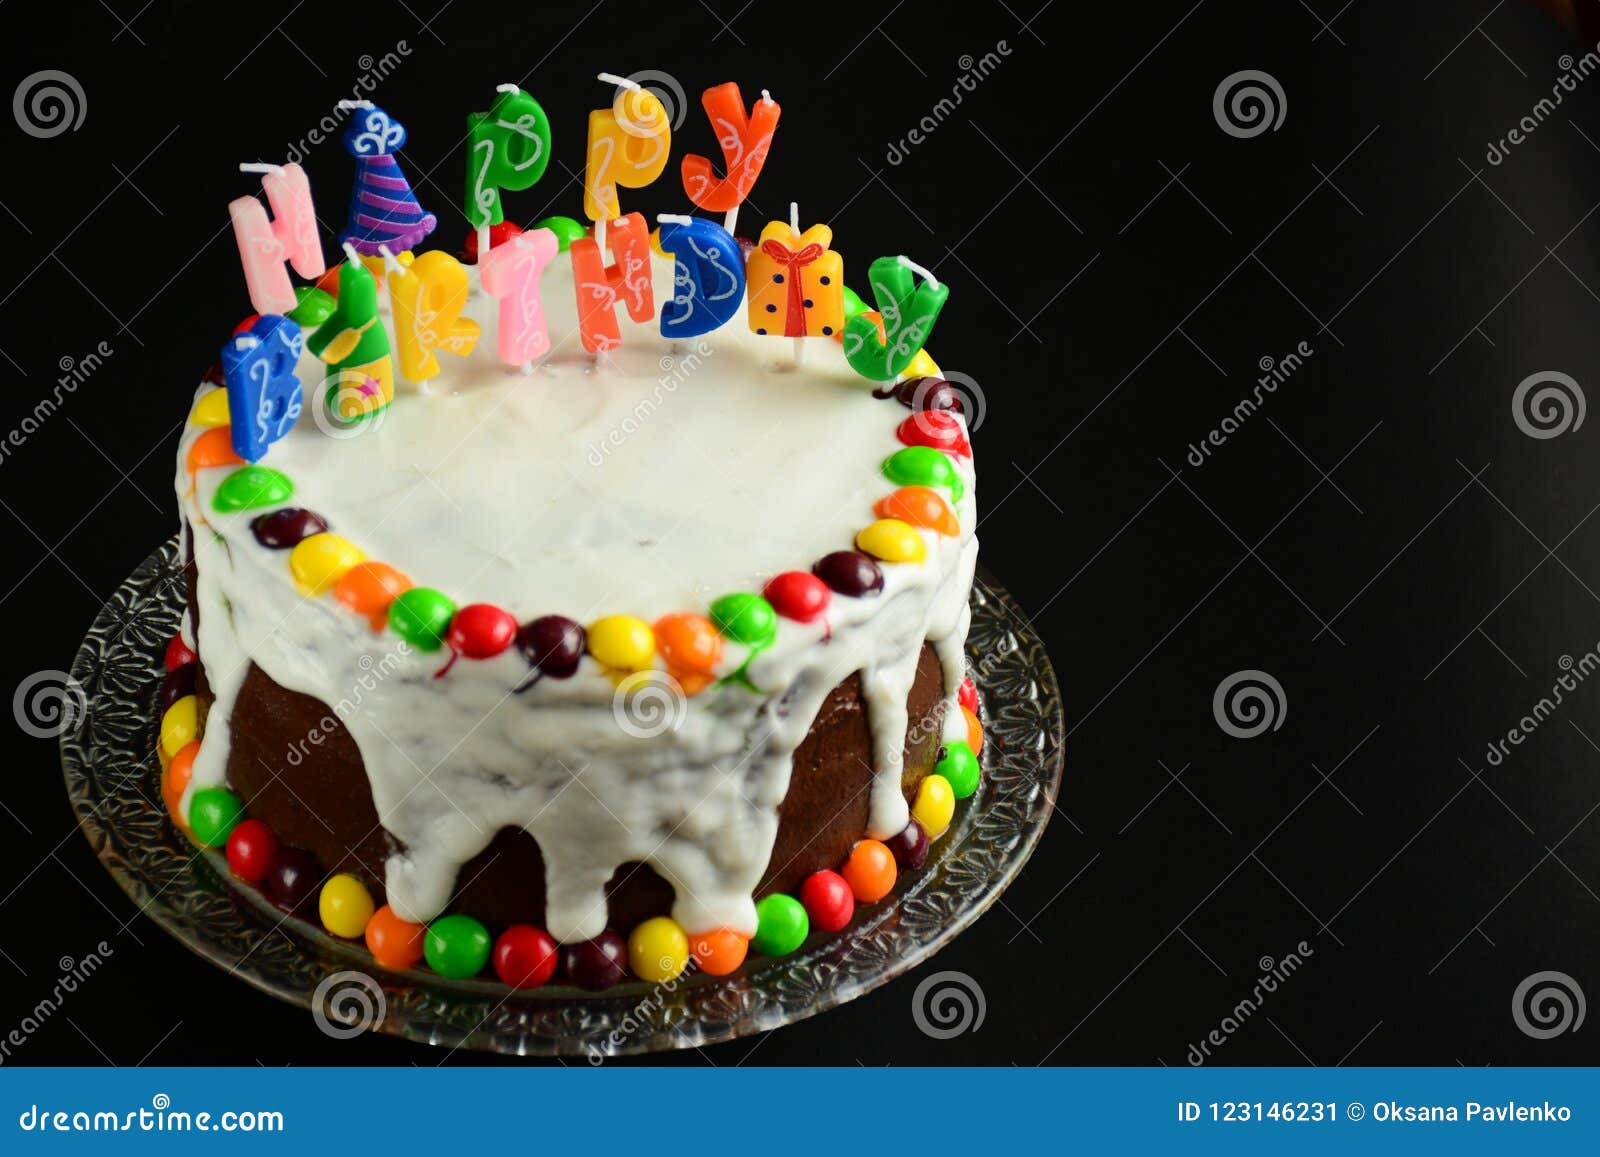 Happy Birthday Cake with Candles on Black Background Stock Image - Image of  cream, birthday: 123146231